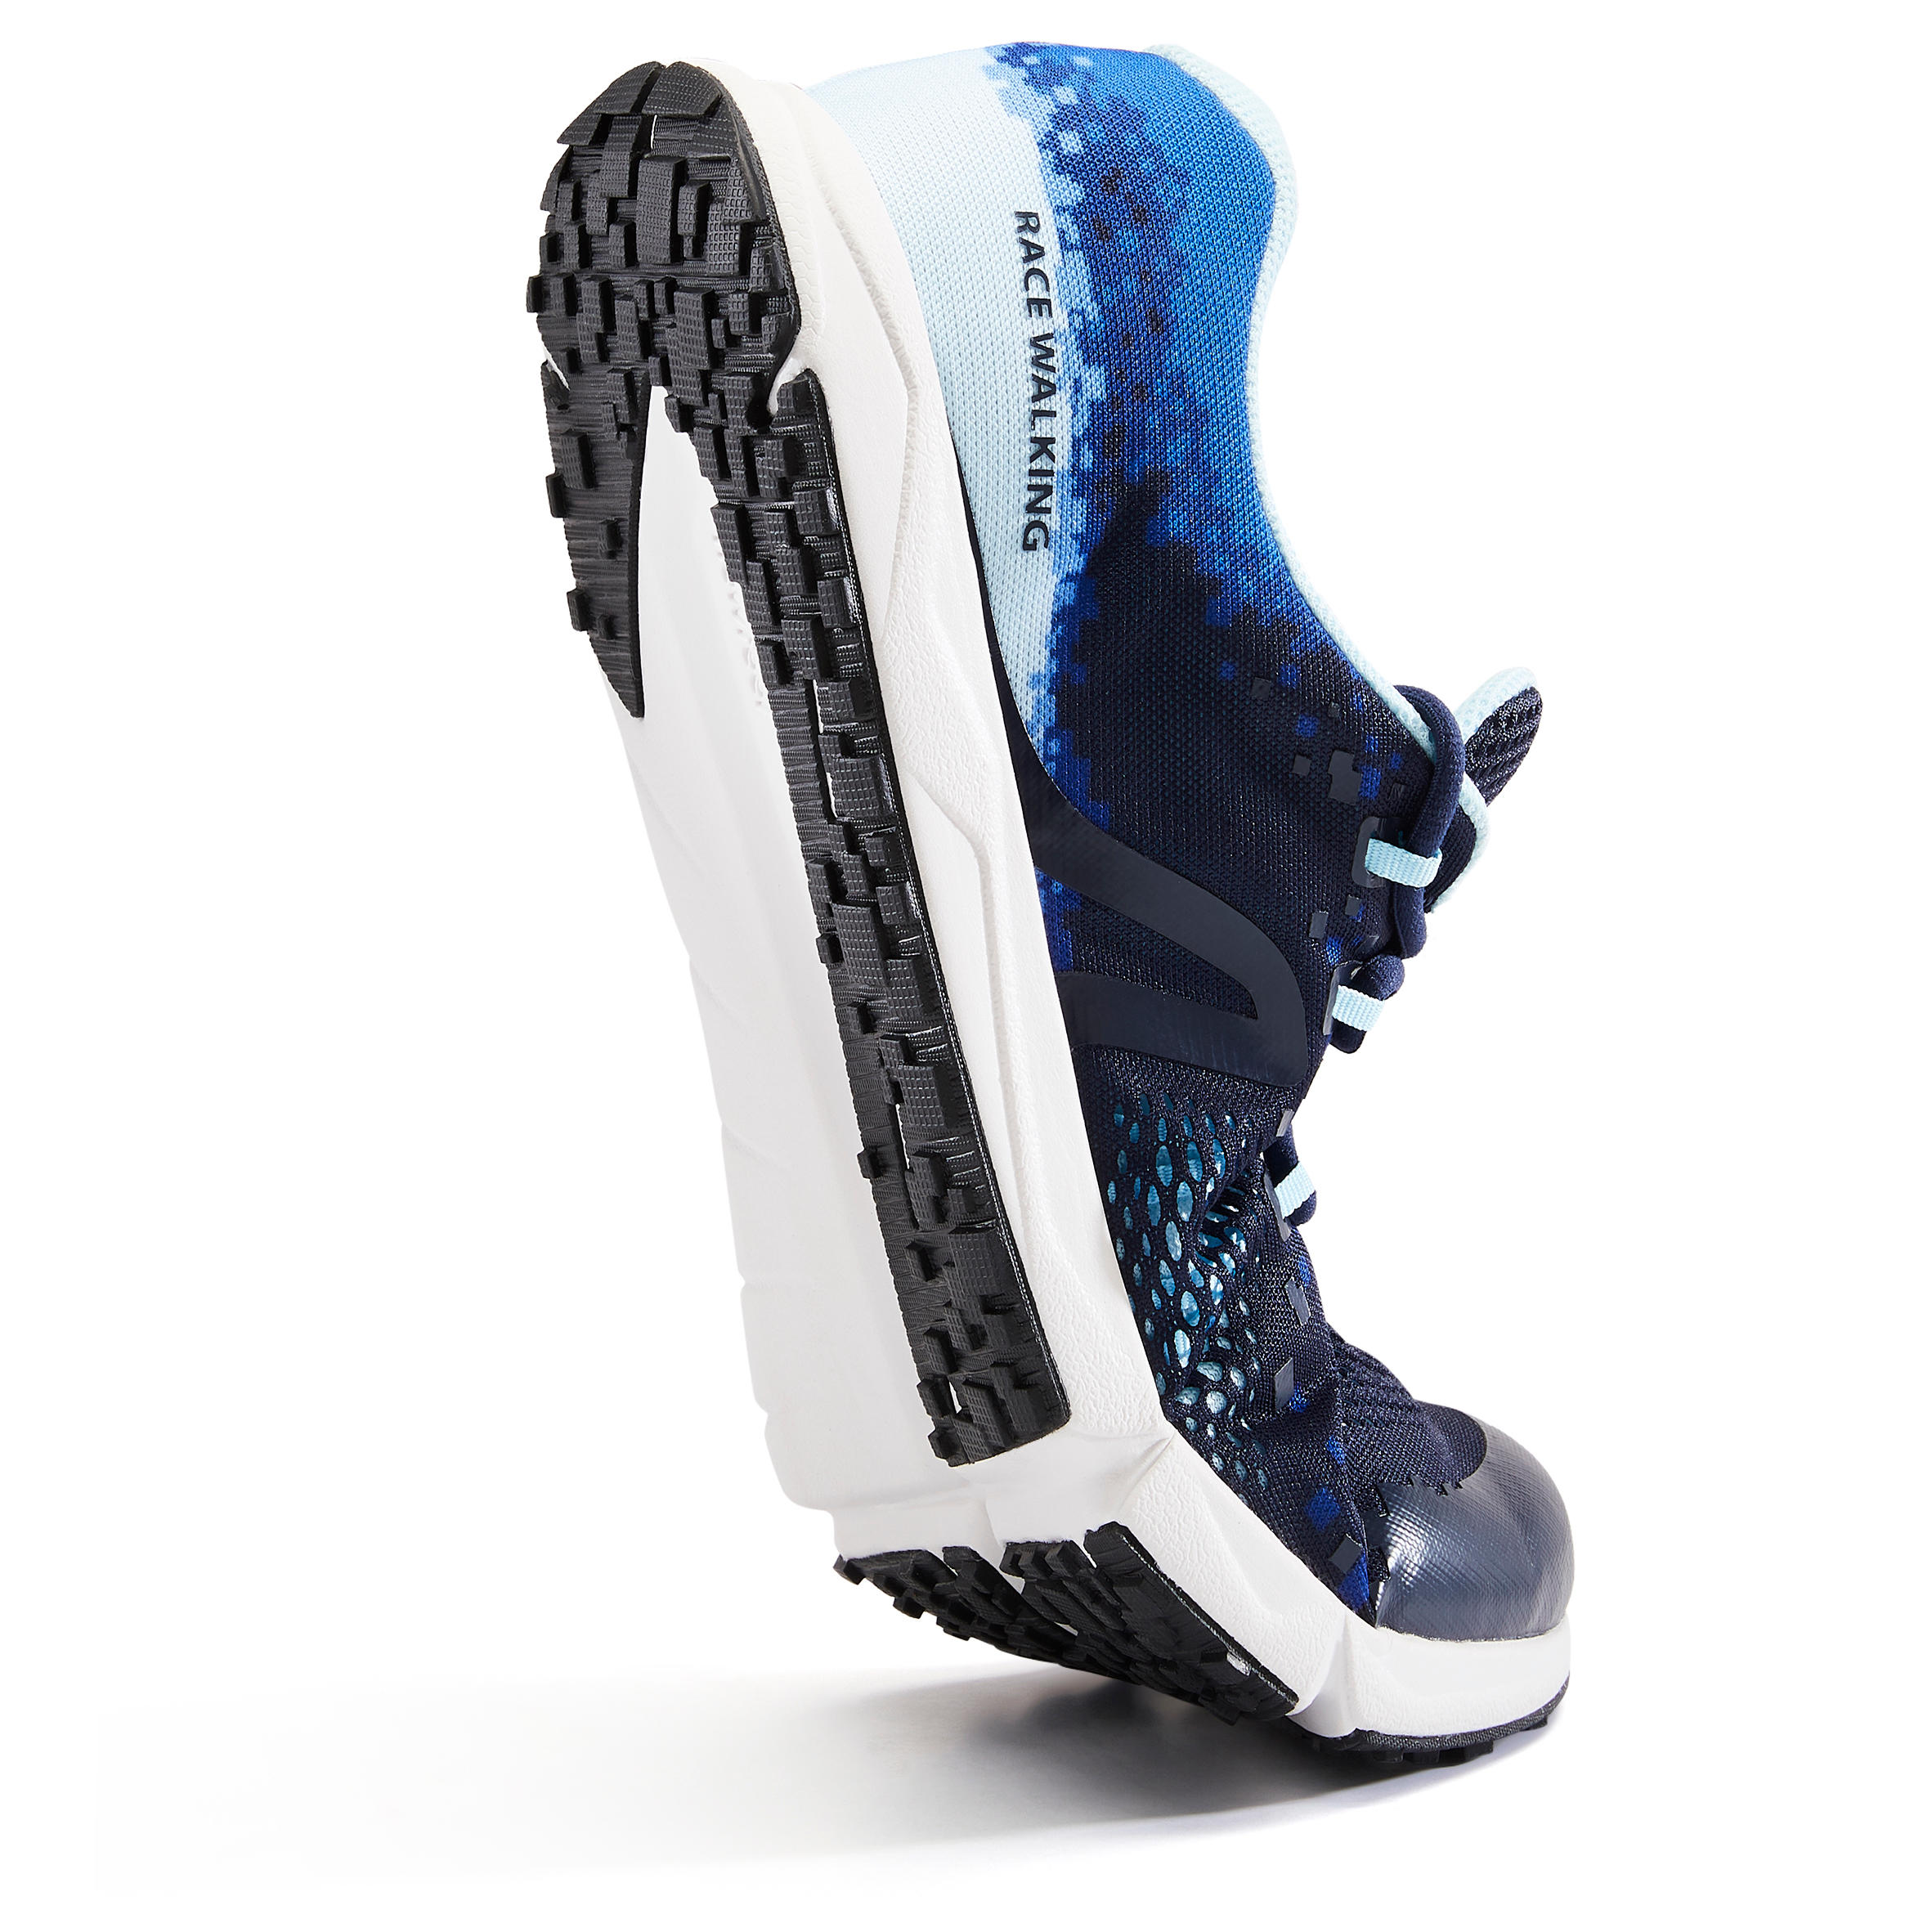 RW 500 fitness walking shoes - blue 6/9